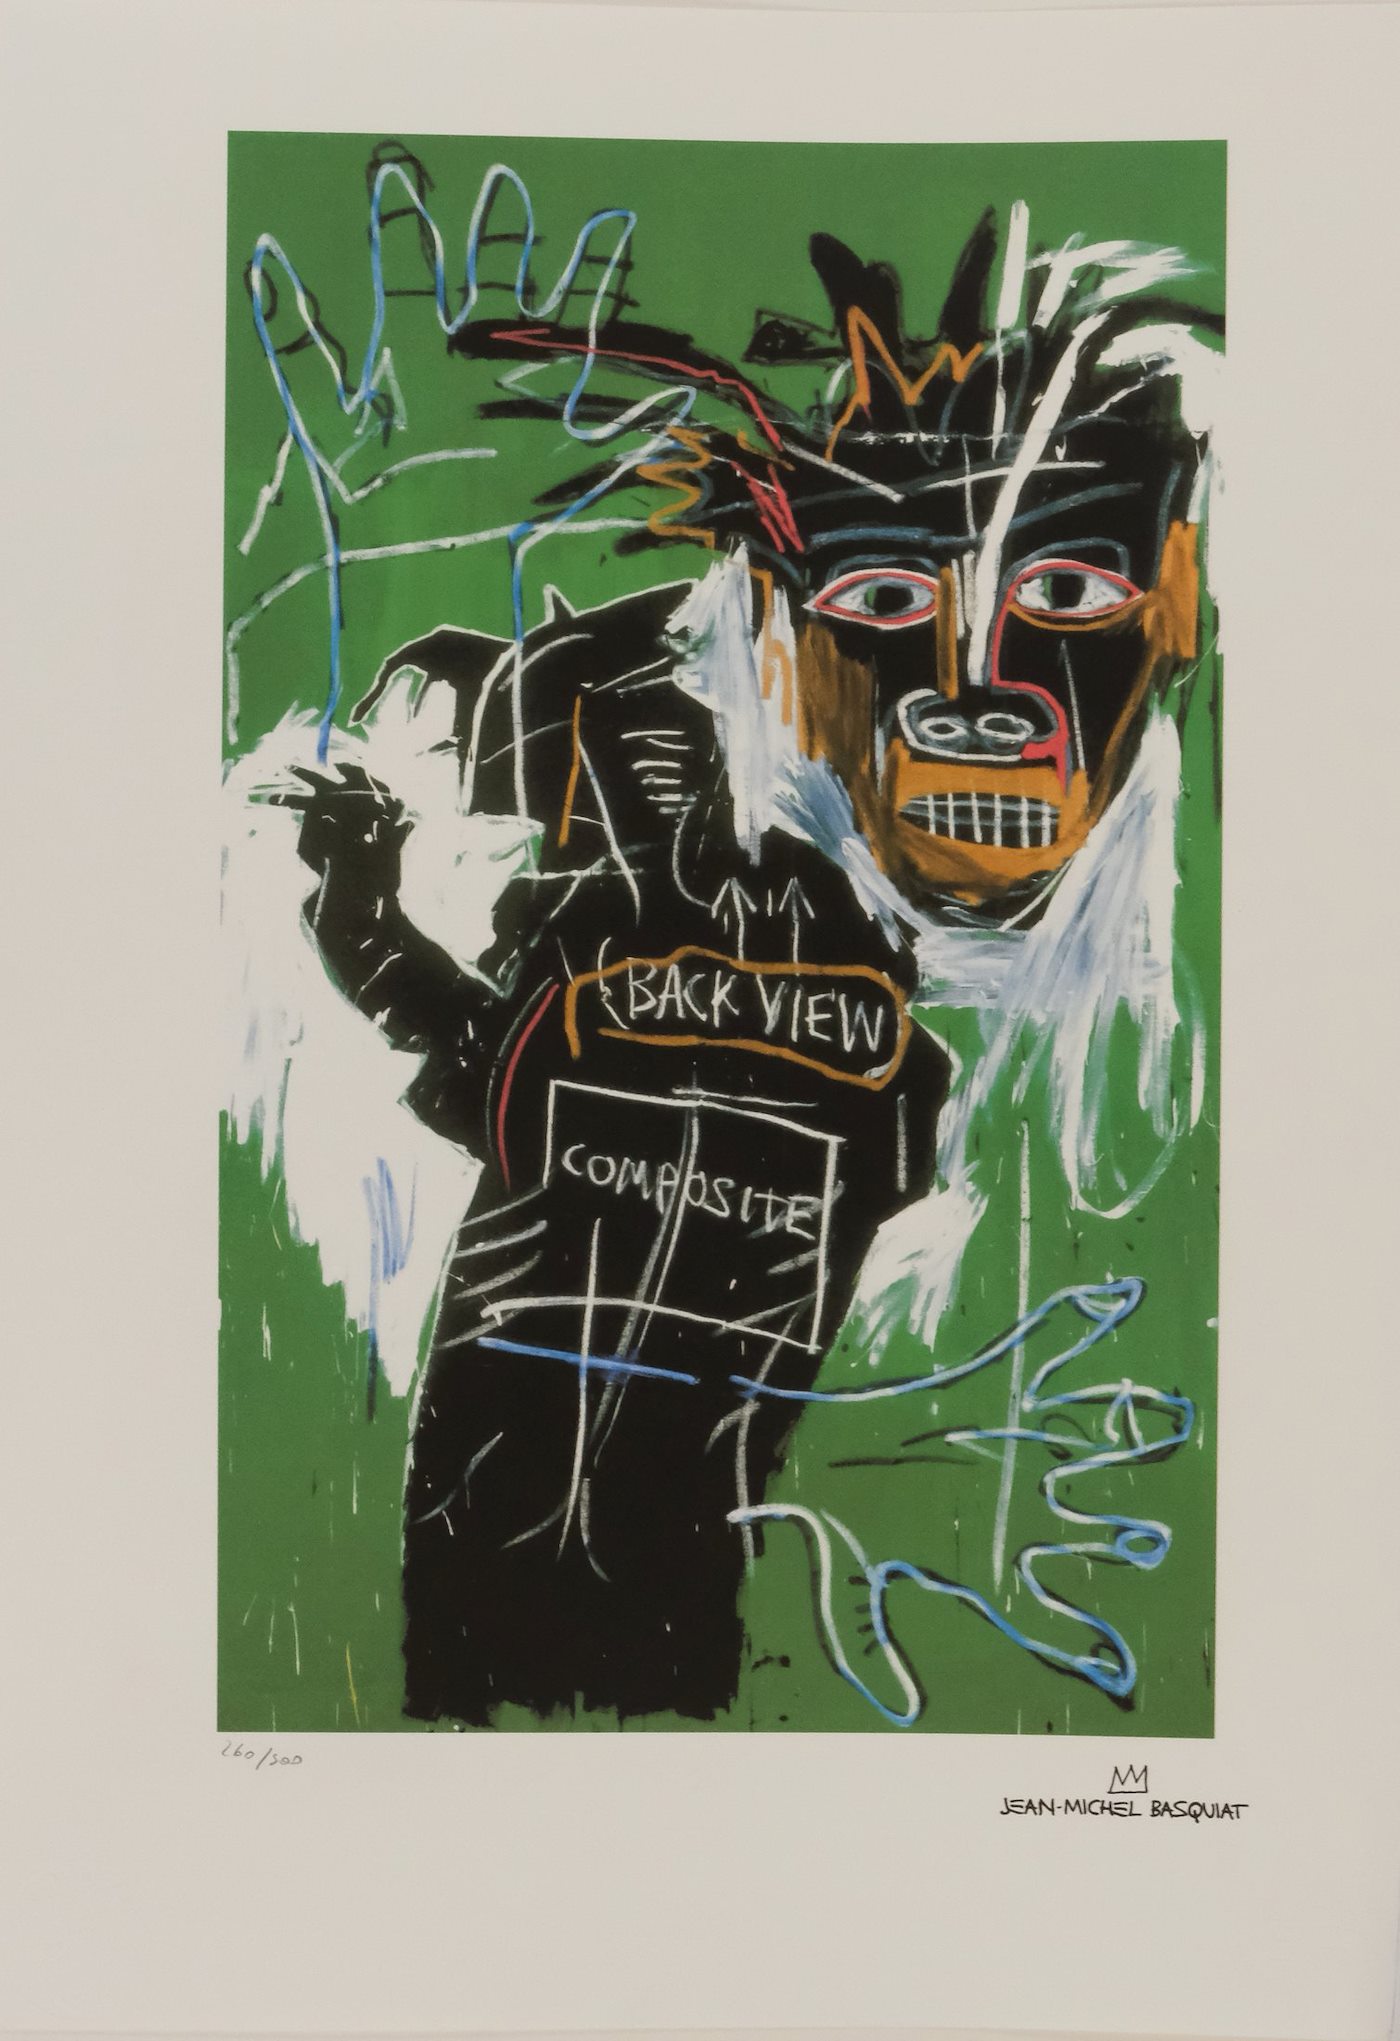 Jean-Michel Basquiat - Back View